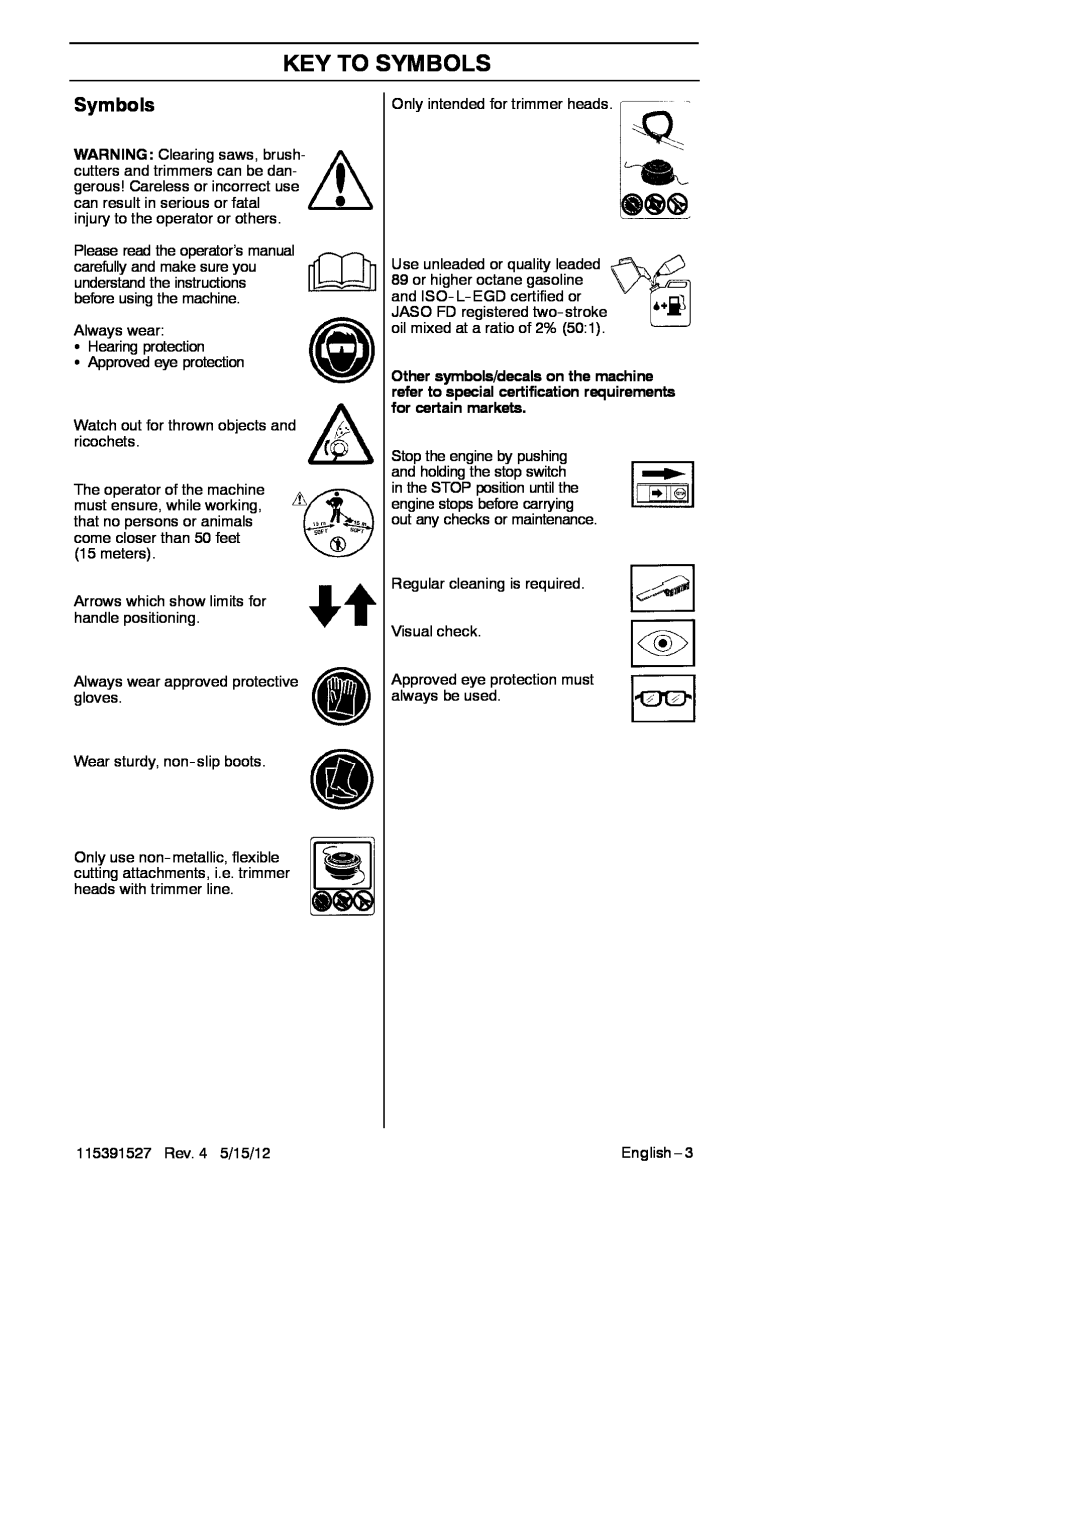 RedMax BC280 manual Key To Symbols 